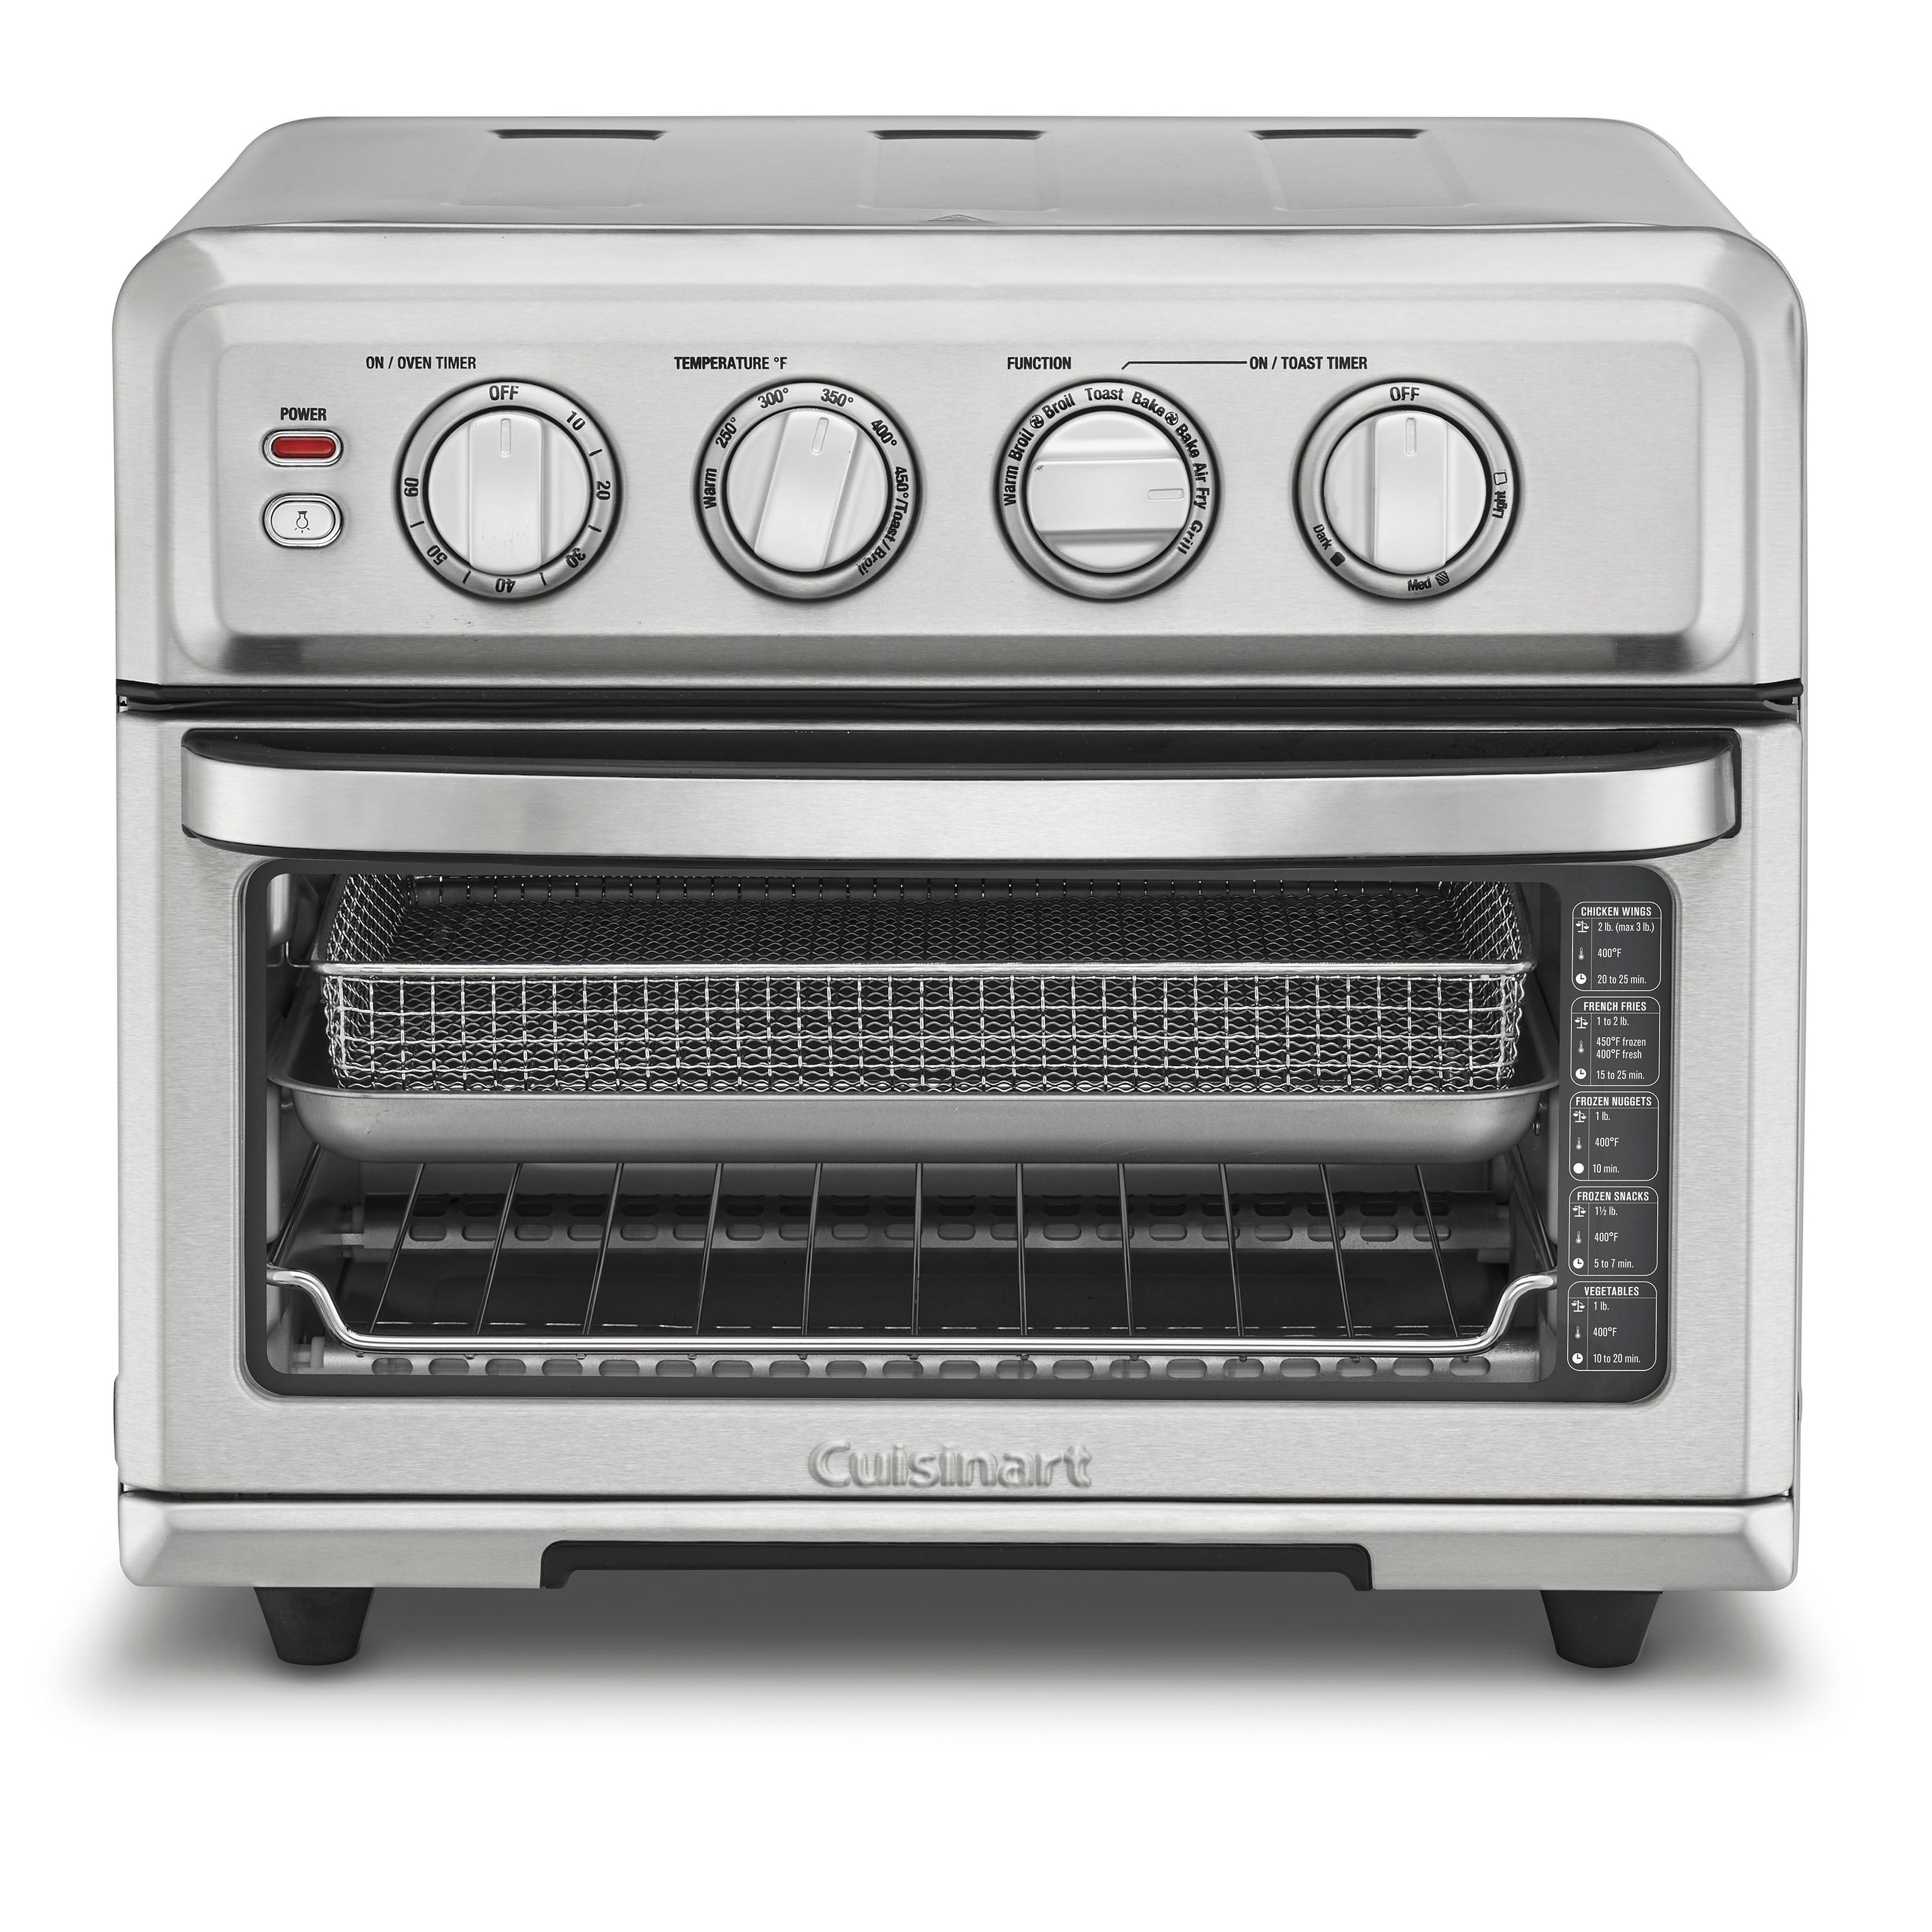 Ariawave 17QT Air Fryer & Toaster Oven - 17QT. - Bed Bath & Beyond